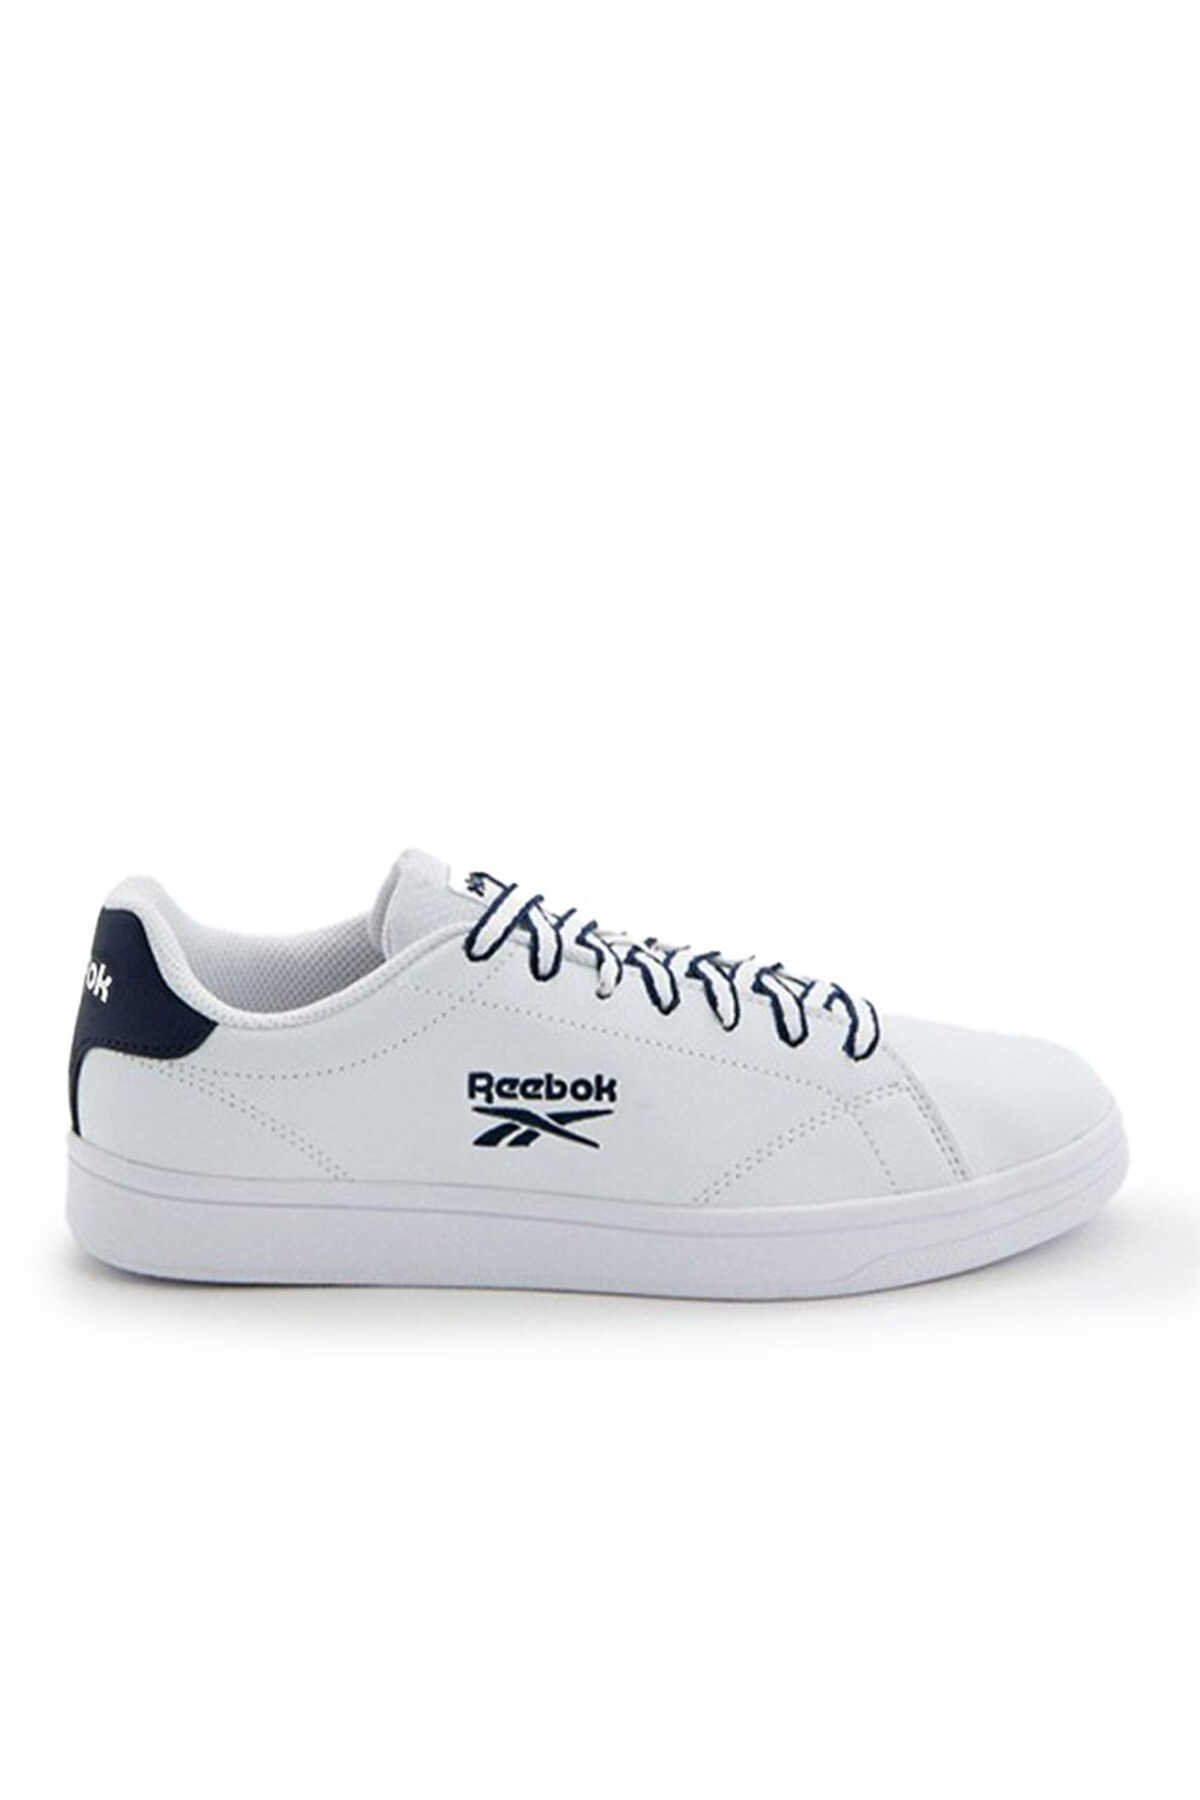 Reebok - Reebok ROYAL COMPLETE Unisex Sneaker Ayakkabı Beyaz